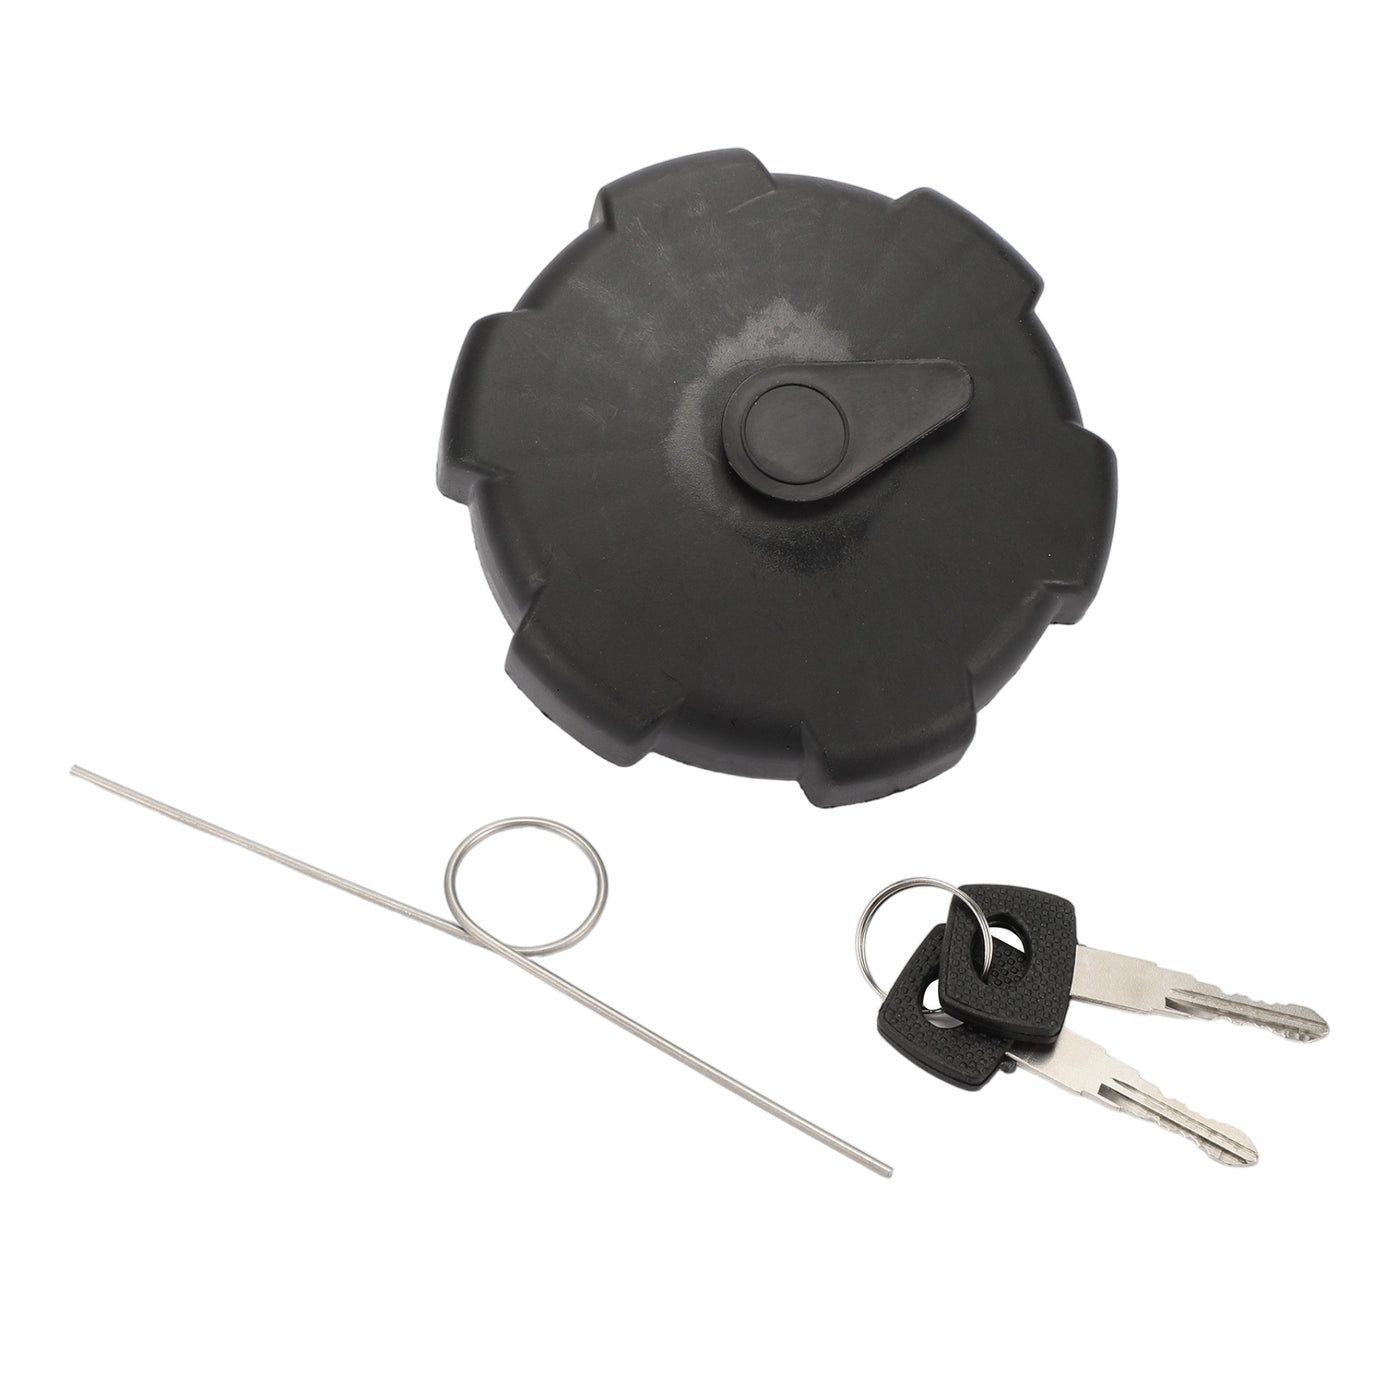 ACROPIX Plastic Locking Gas Cap Lock Fuel Tank Cap Black Fit for Mercedes-Benz Actros 1831-1846 with Keys No.A0004700405 - Pack of 3